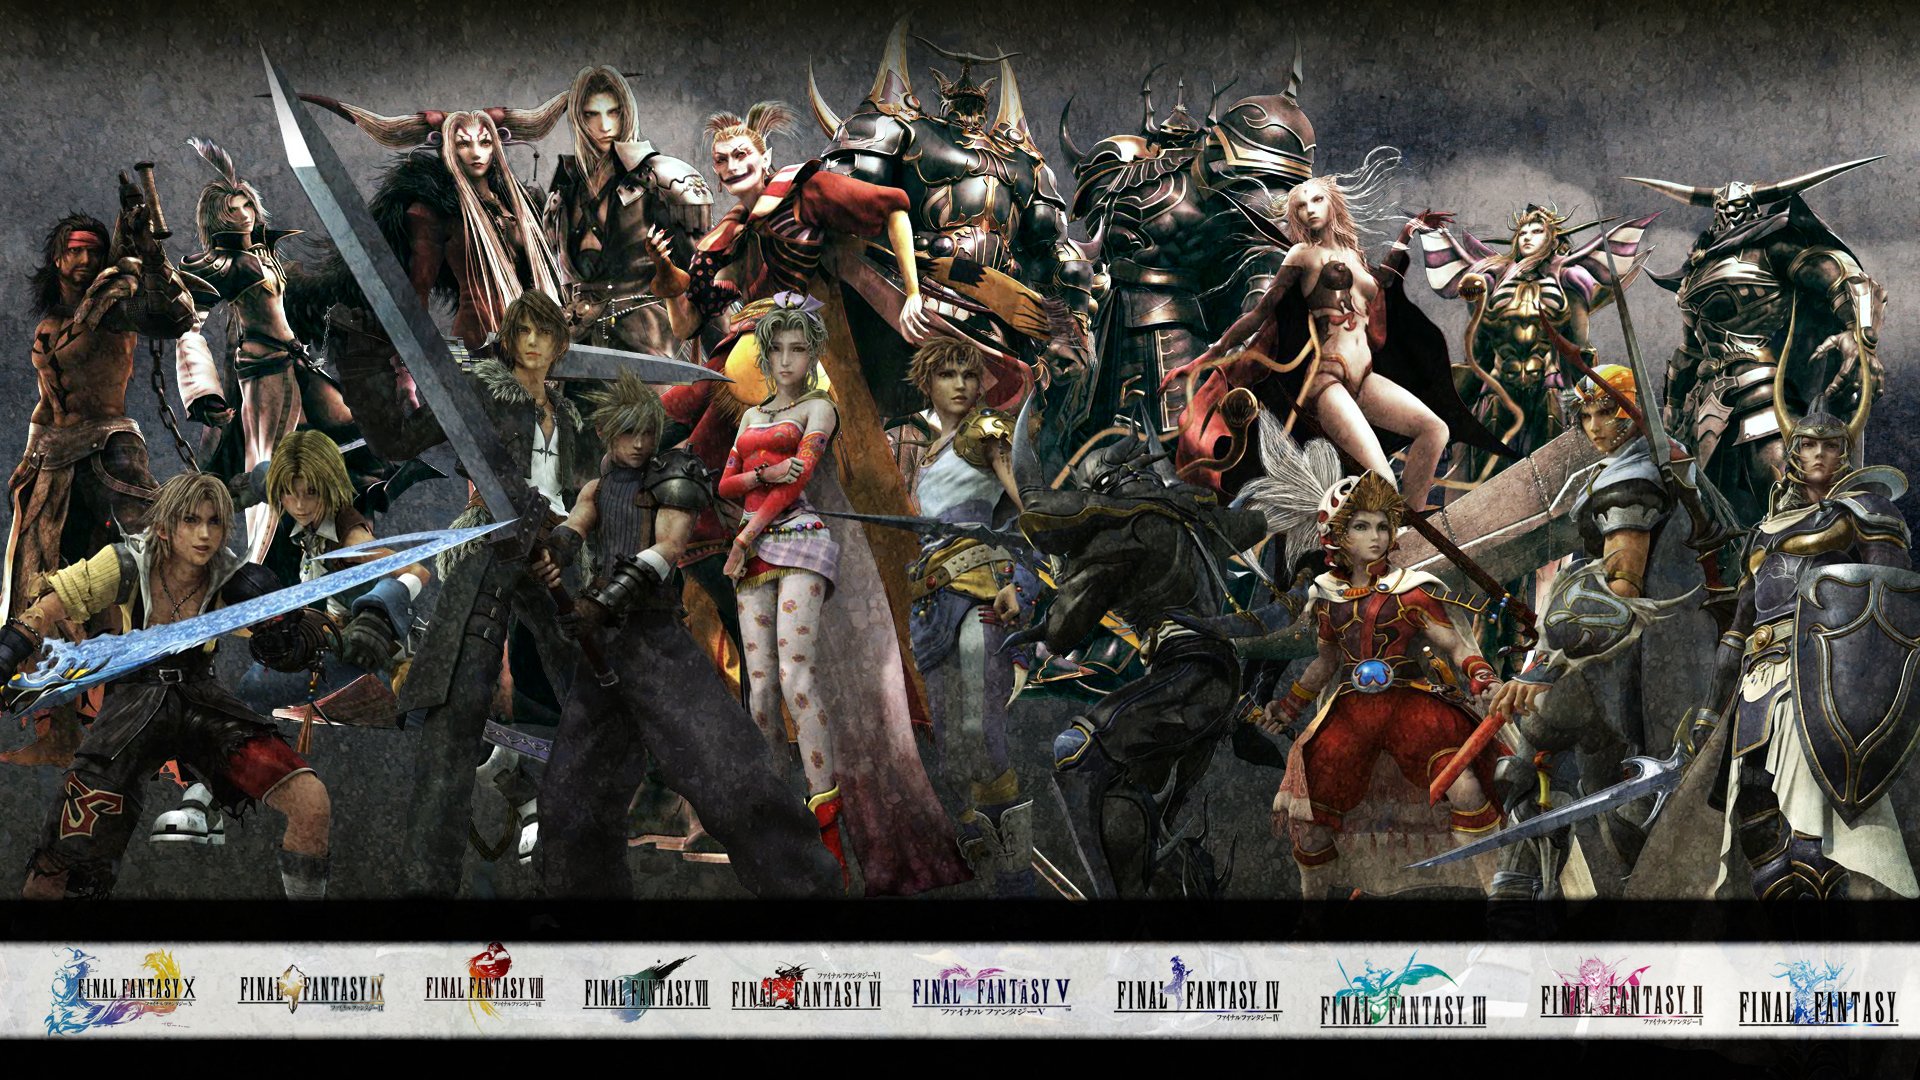 Dissidia: Final Fantasy Wallpapers